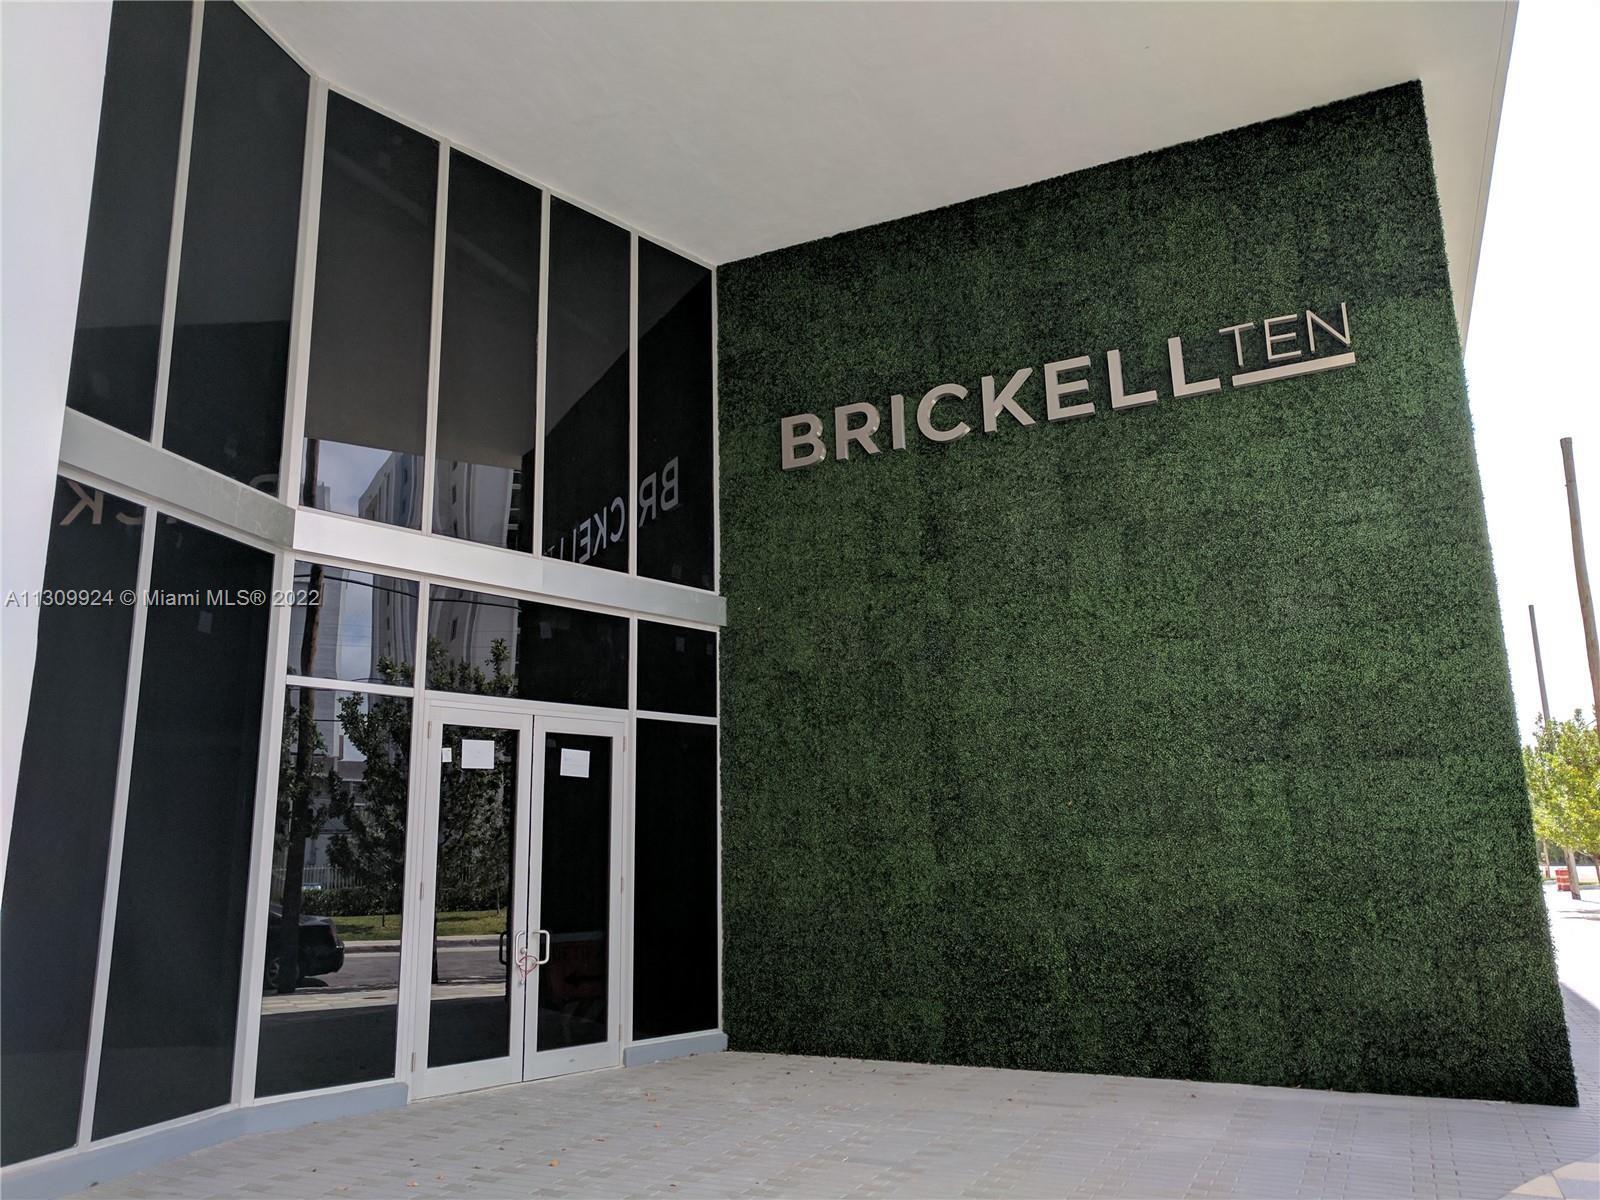 Brickell Ten image #33